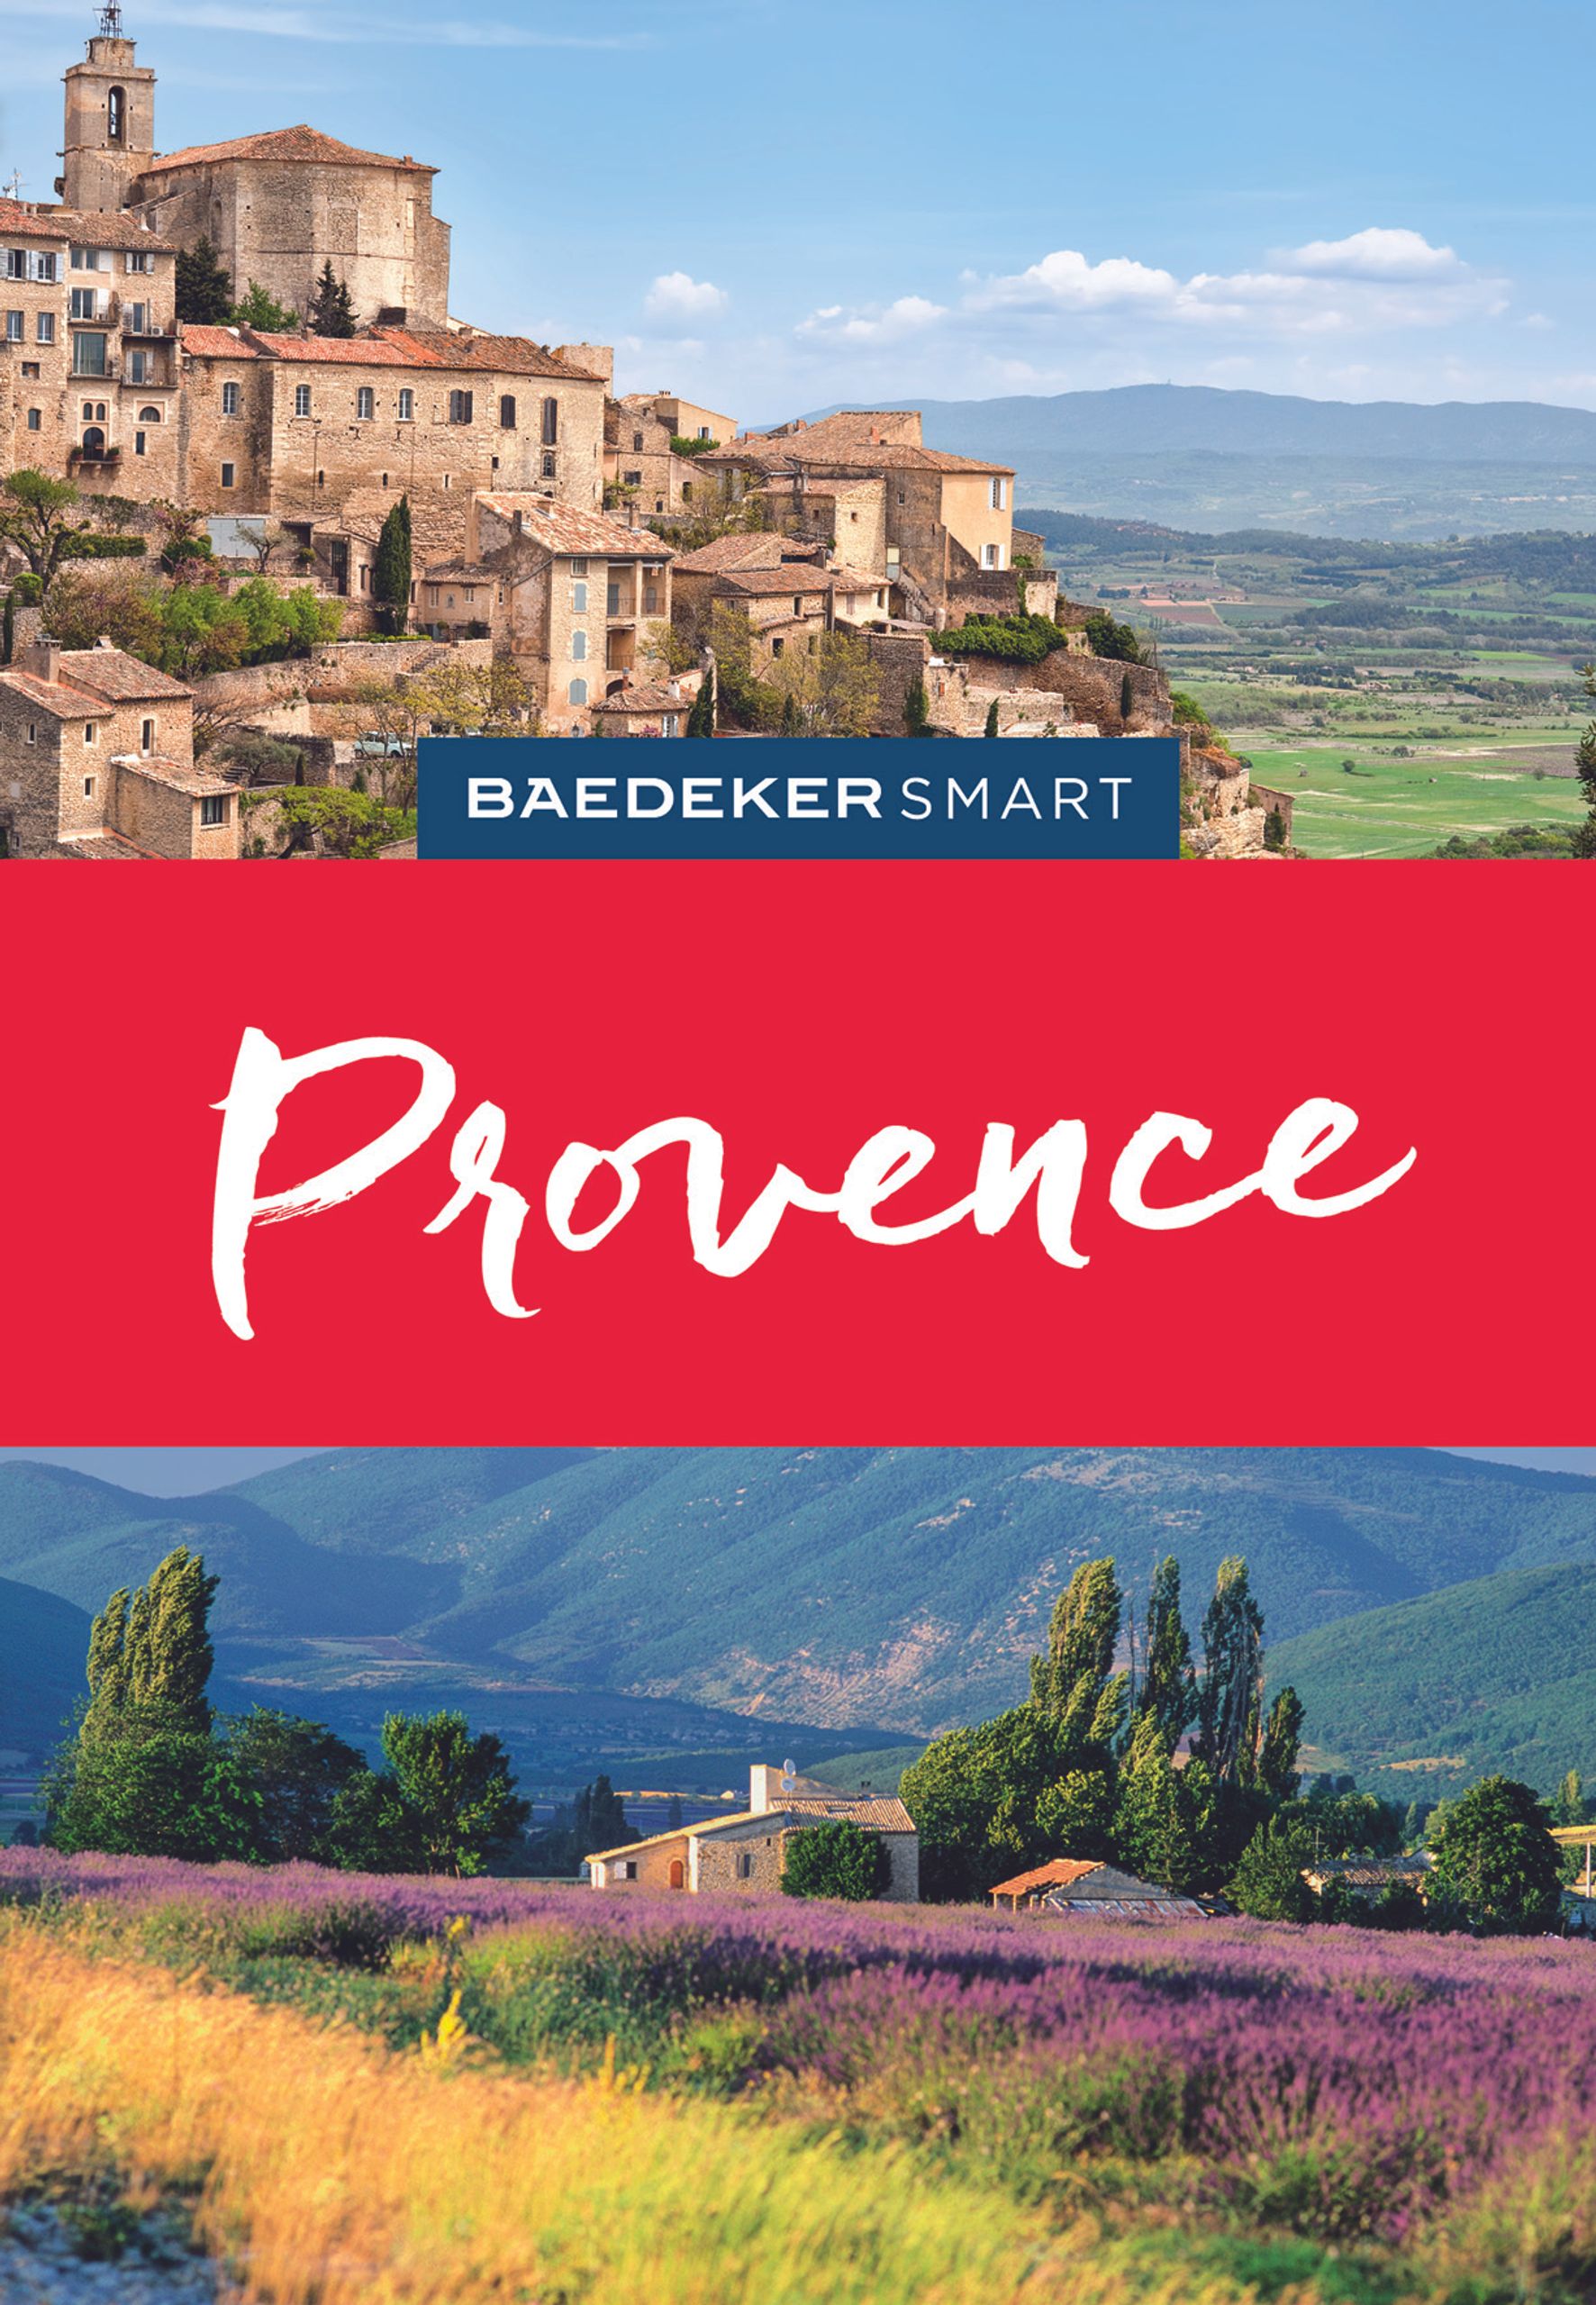 Baedeker Provence (eBook)